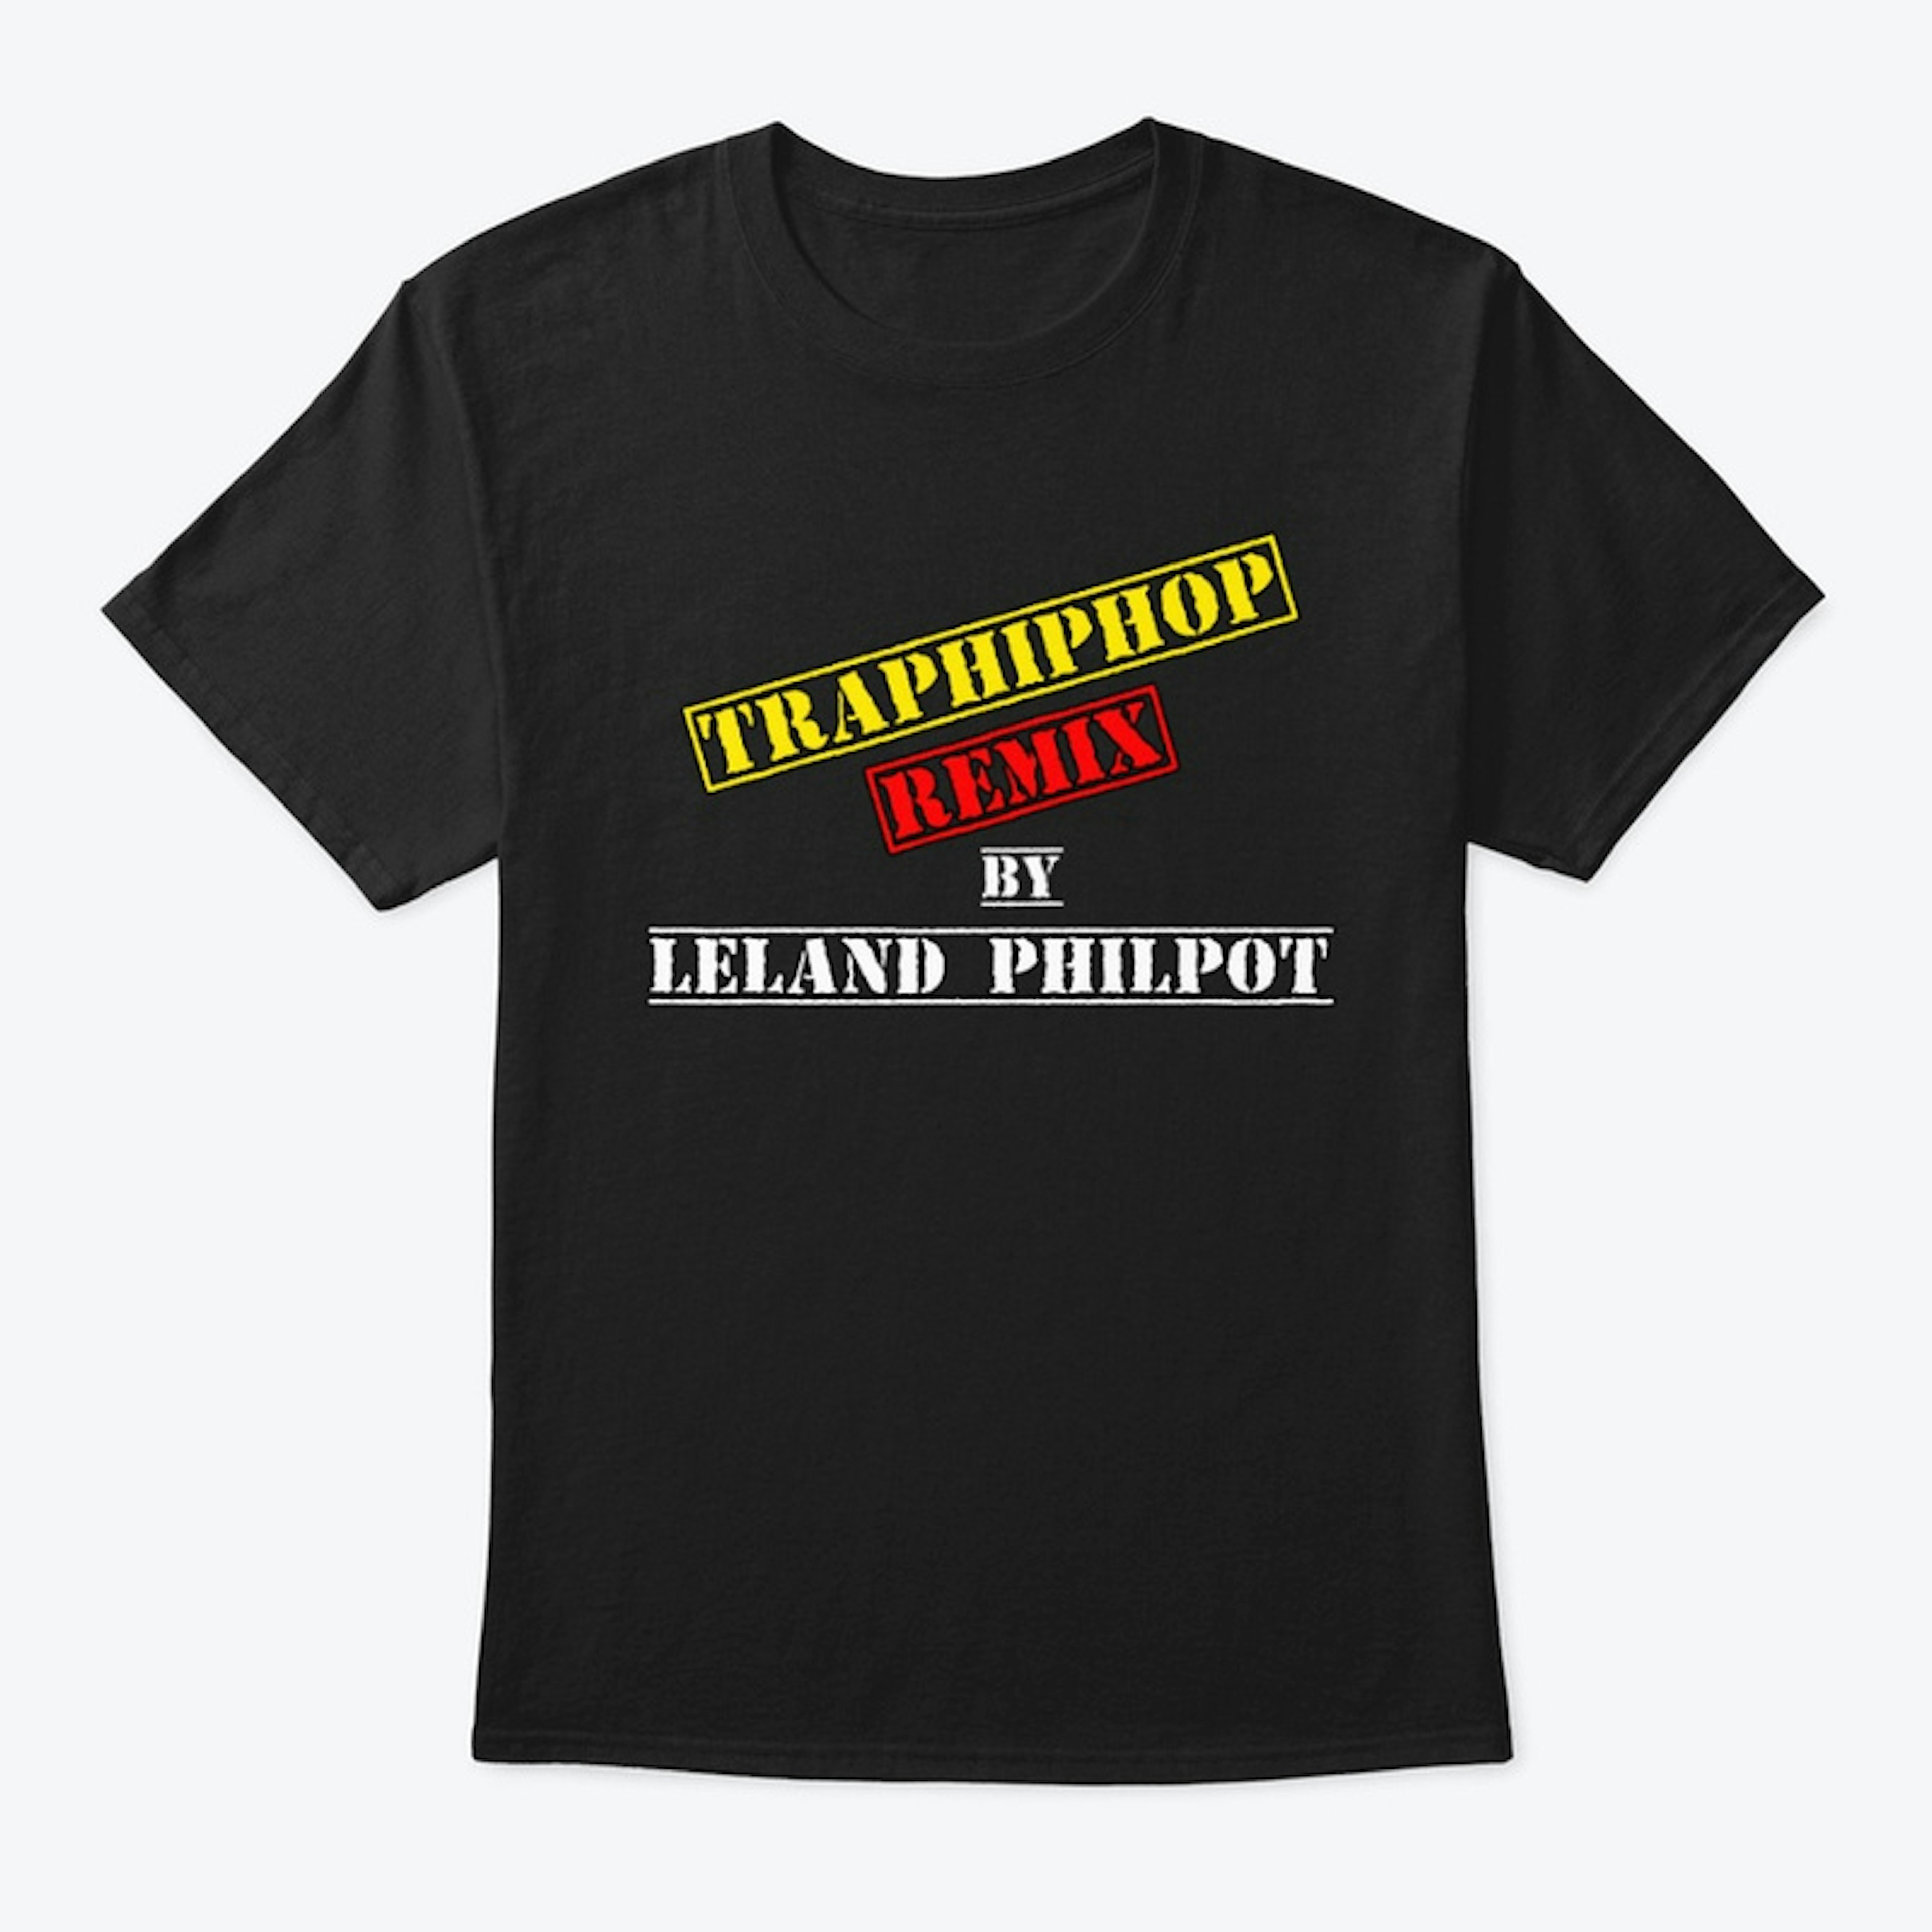 TRAPHIPHOPREMIX t-shirt!